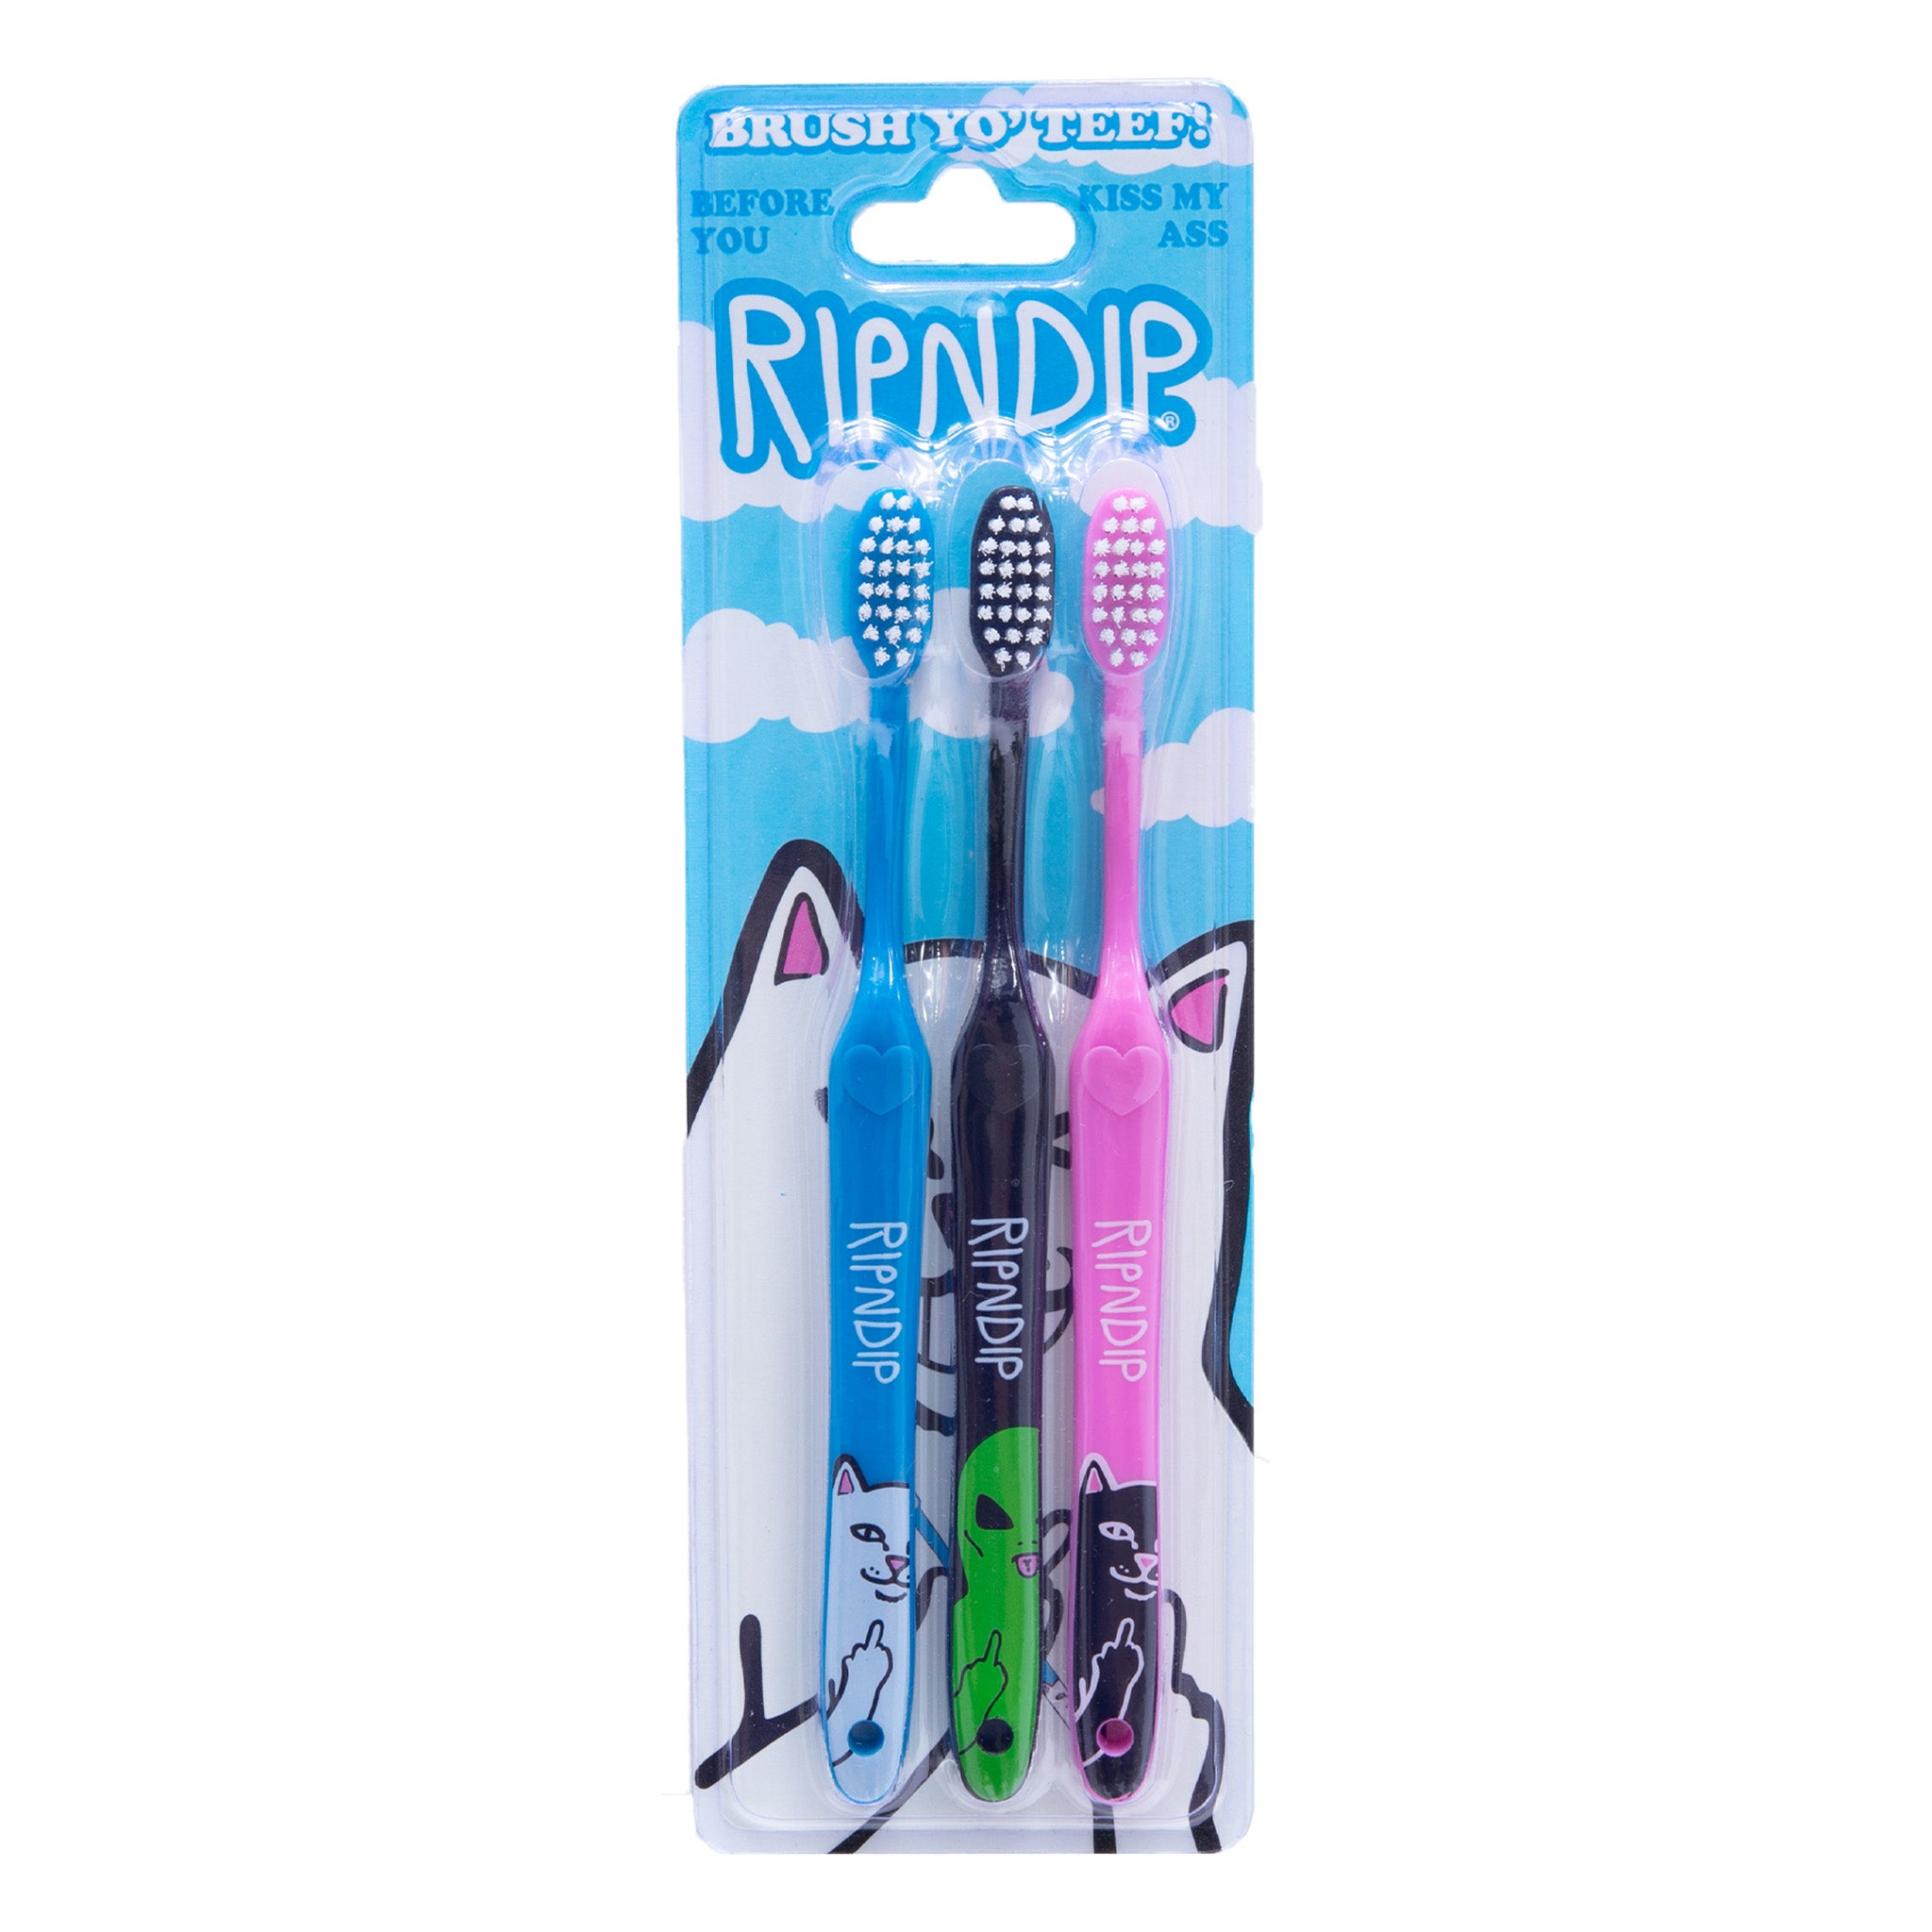 RIPNDIP RIPNDIP Characters Toothbrush 3 Pack (Multi)